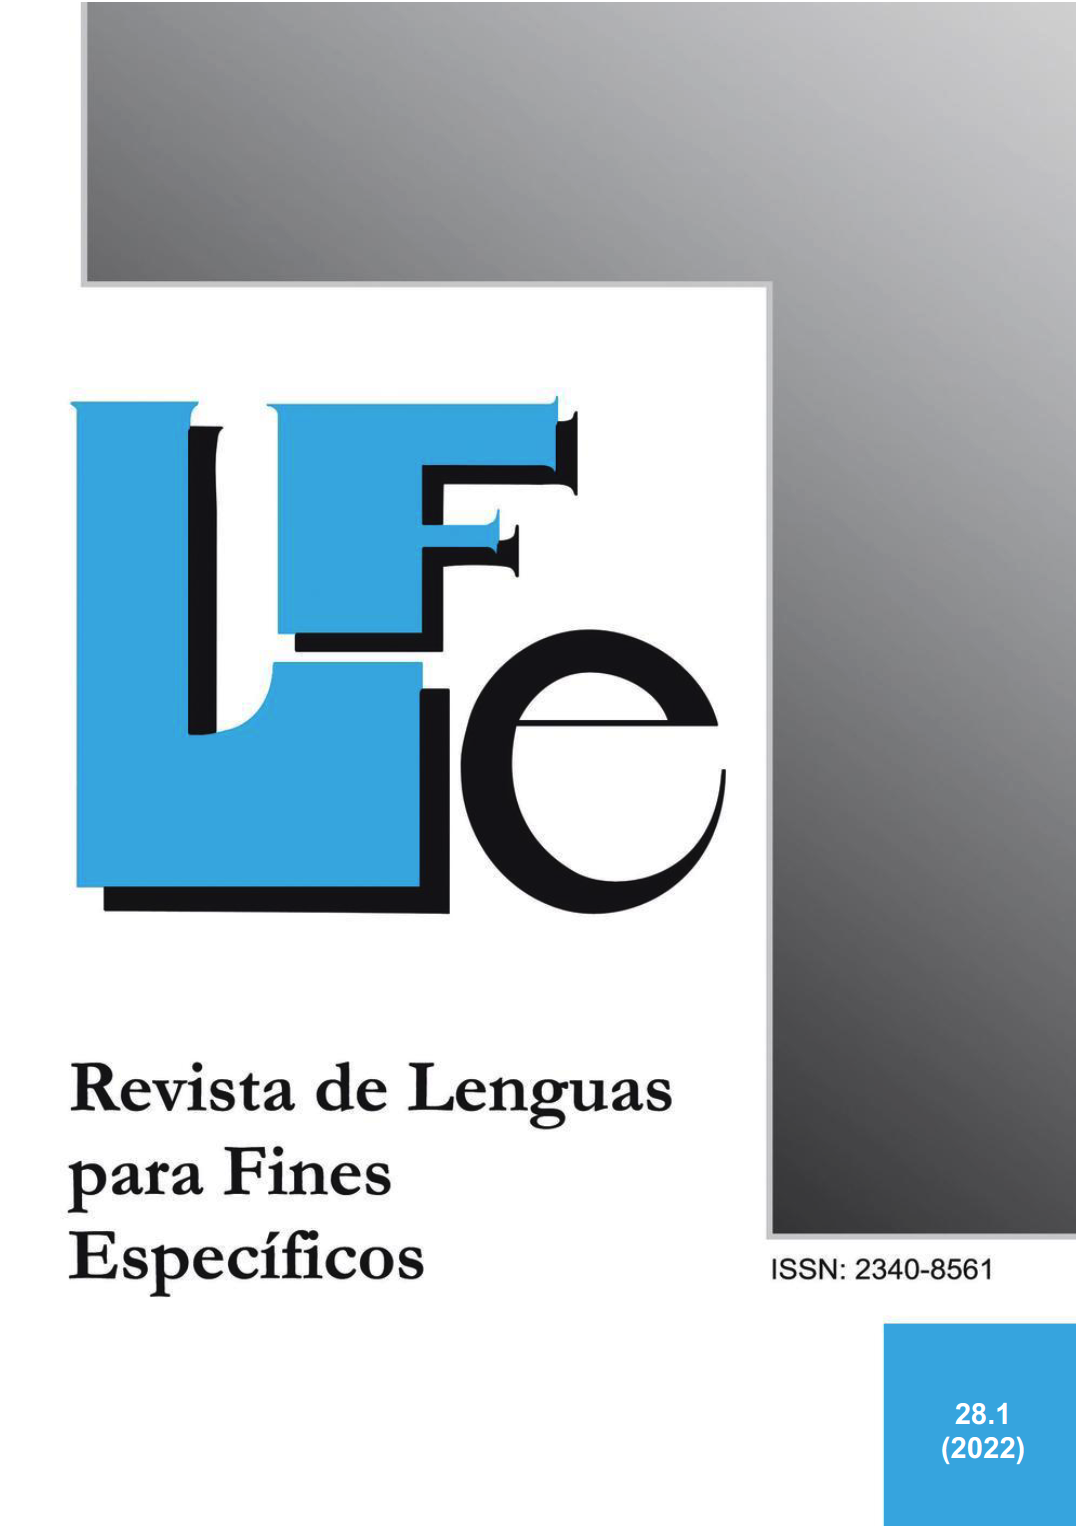 					View Vol. 28 No. 1 (2022): Revista de lenguas para fines específicos
				